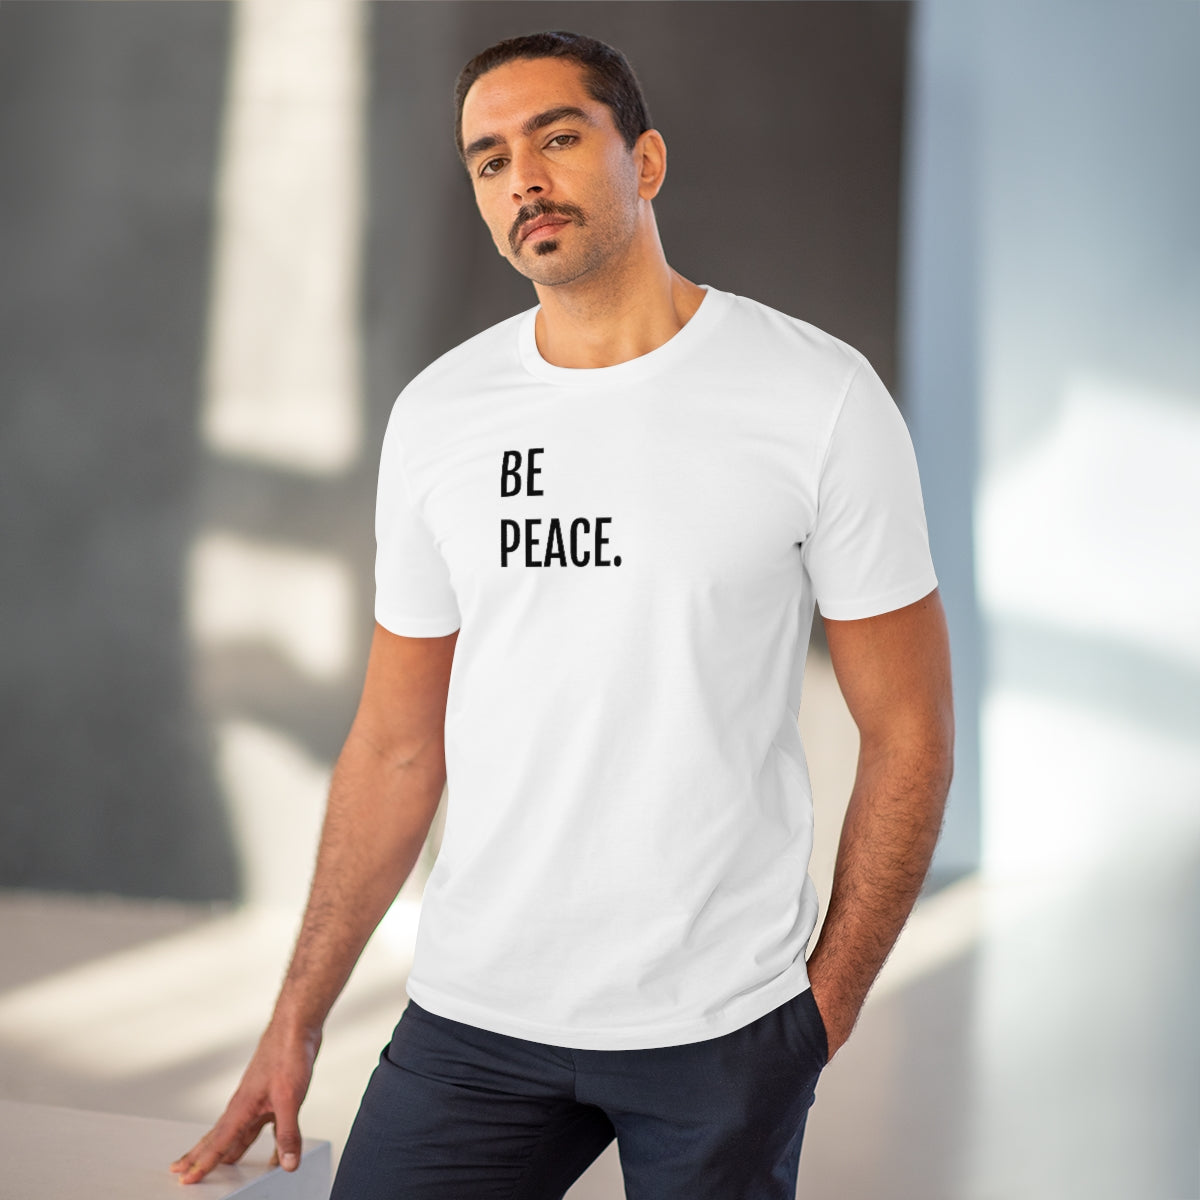 BE PEACE. - Organic Creator T-shirt - Unisex